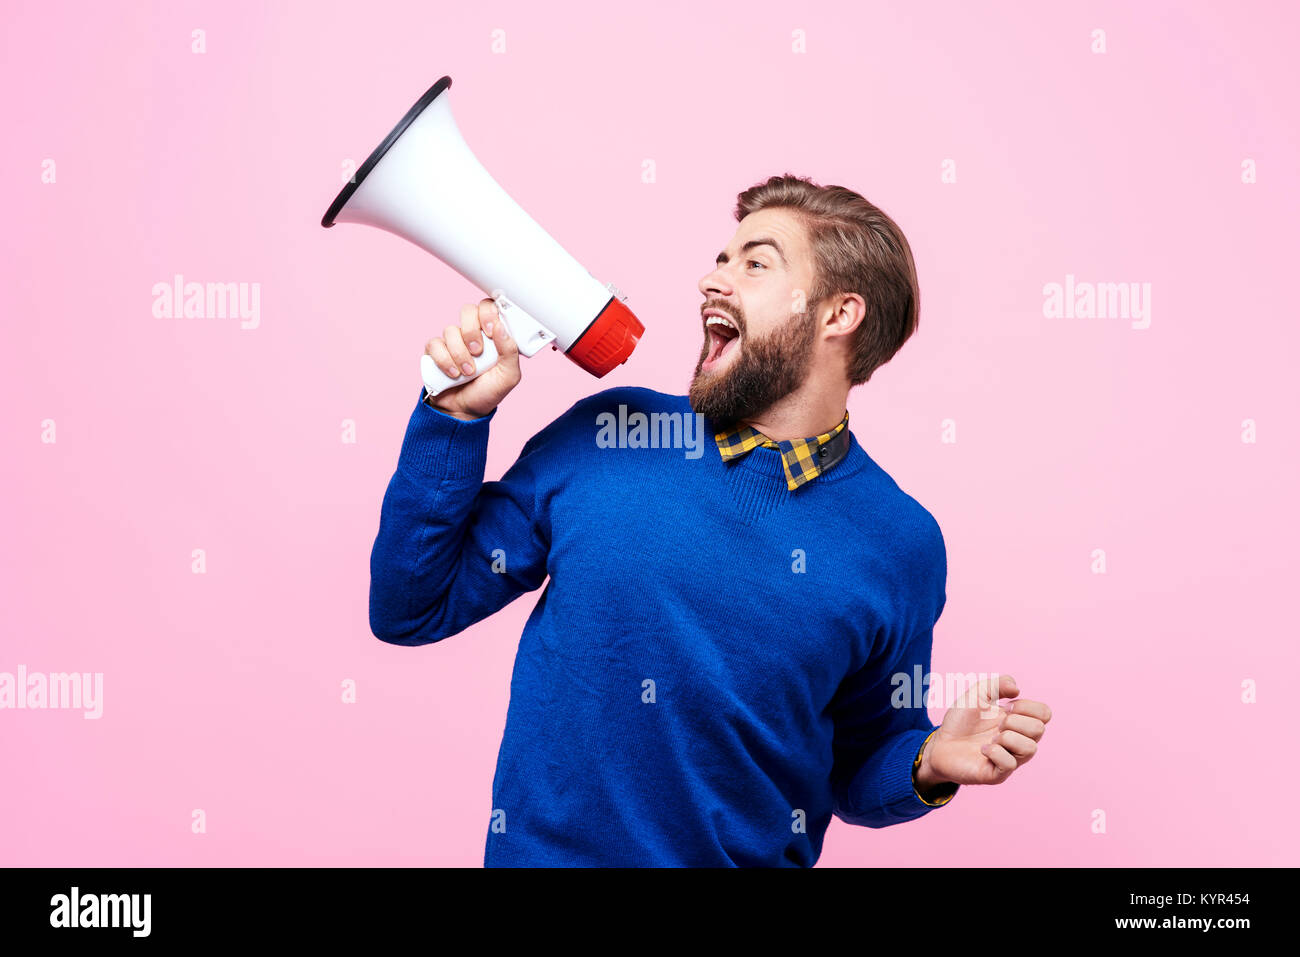 Cheerful man shouting into megaphone Stock Photo